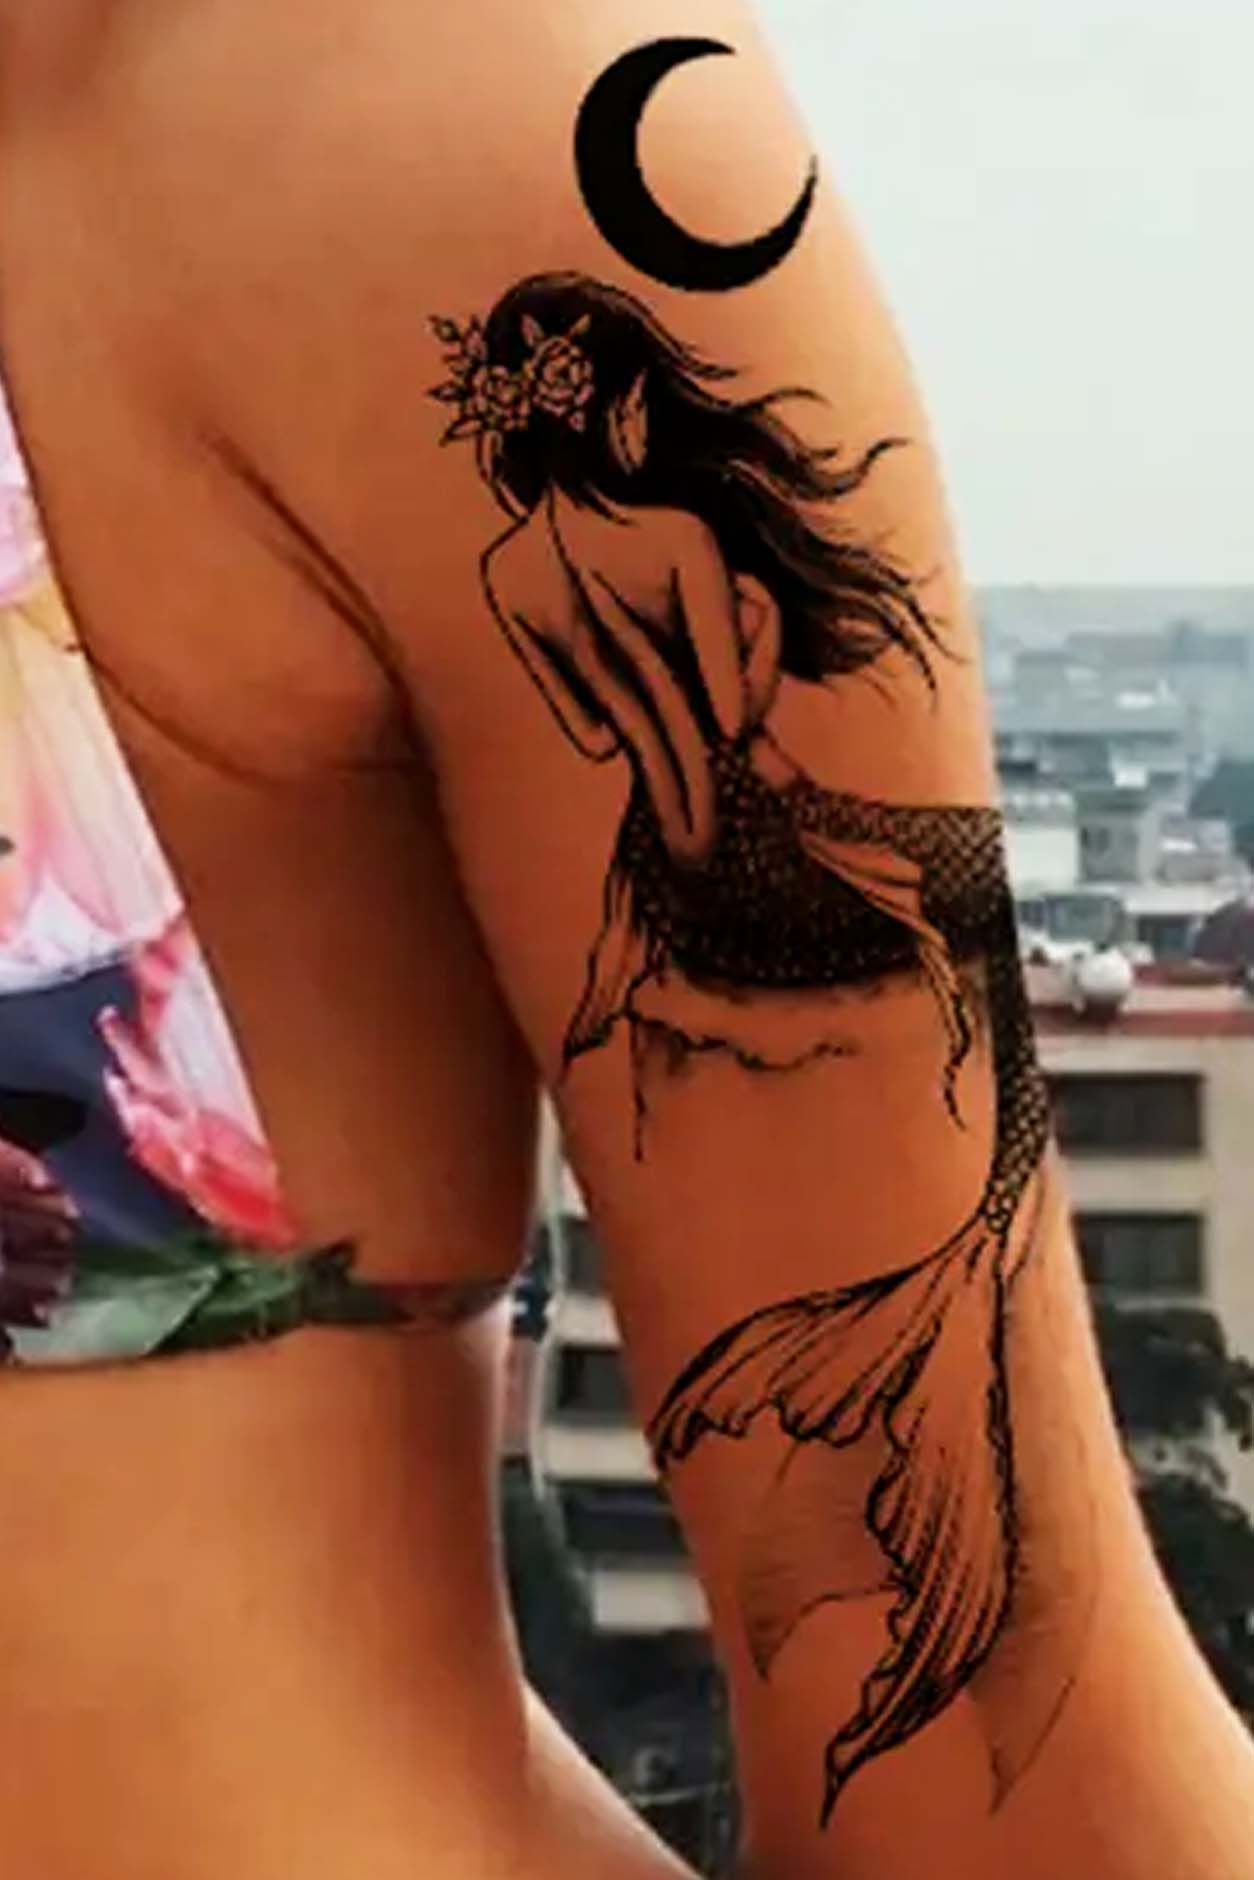 Red Tattoos: Pictures, Symbolism, Safety ⋆ TATTLAS Bali Tattoo